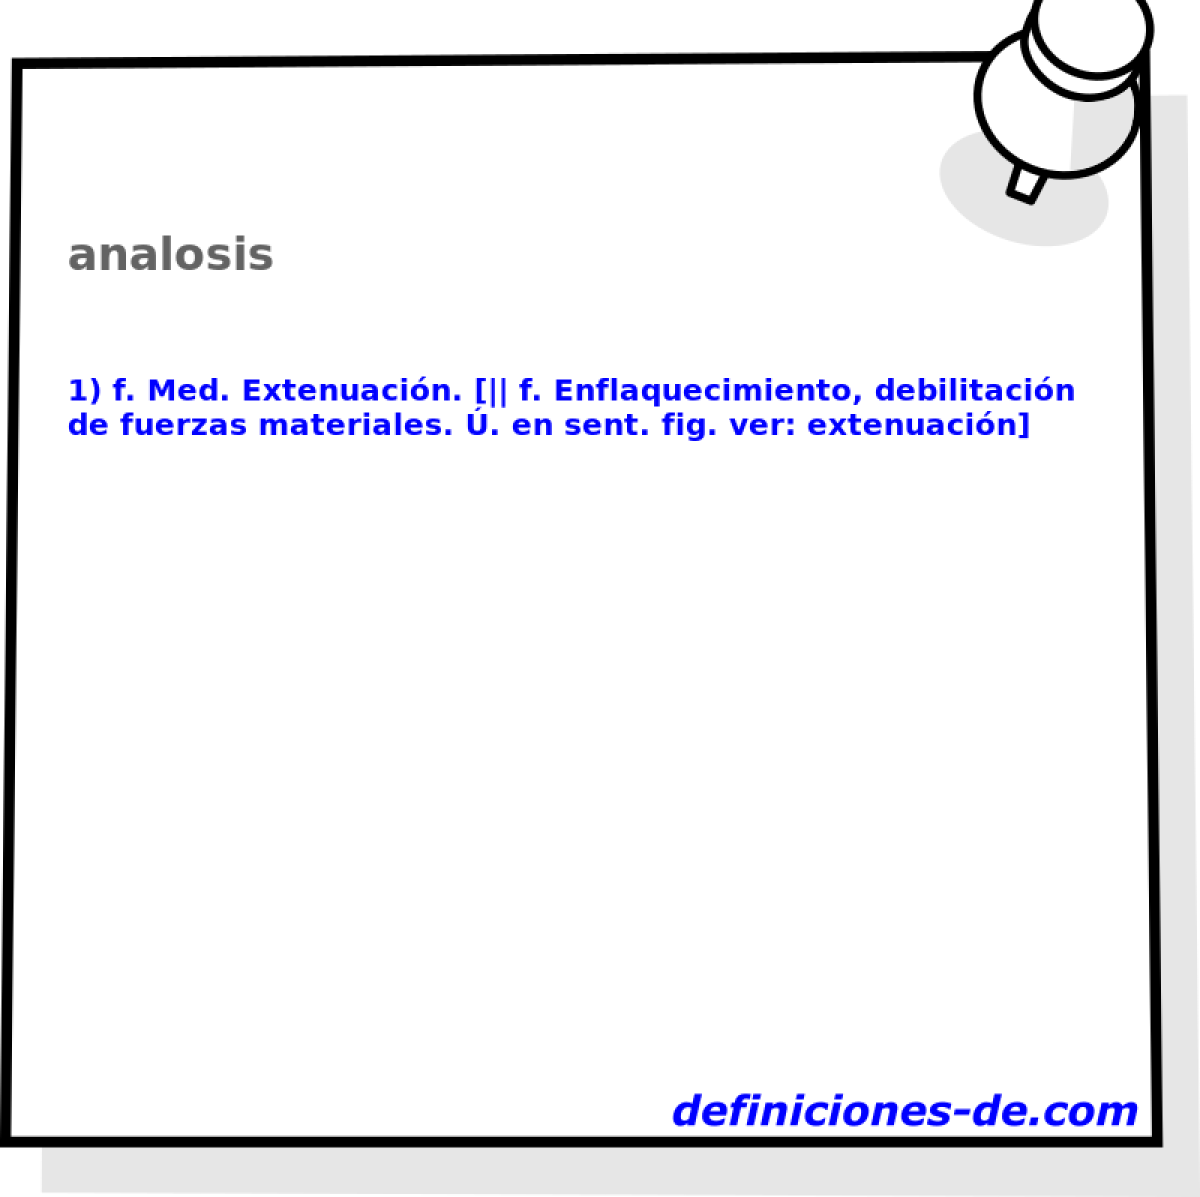 analosis 